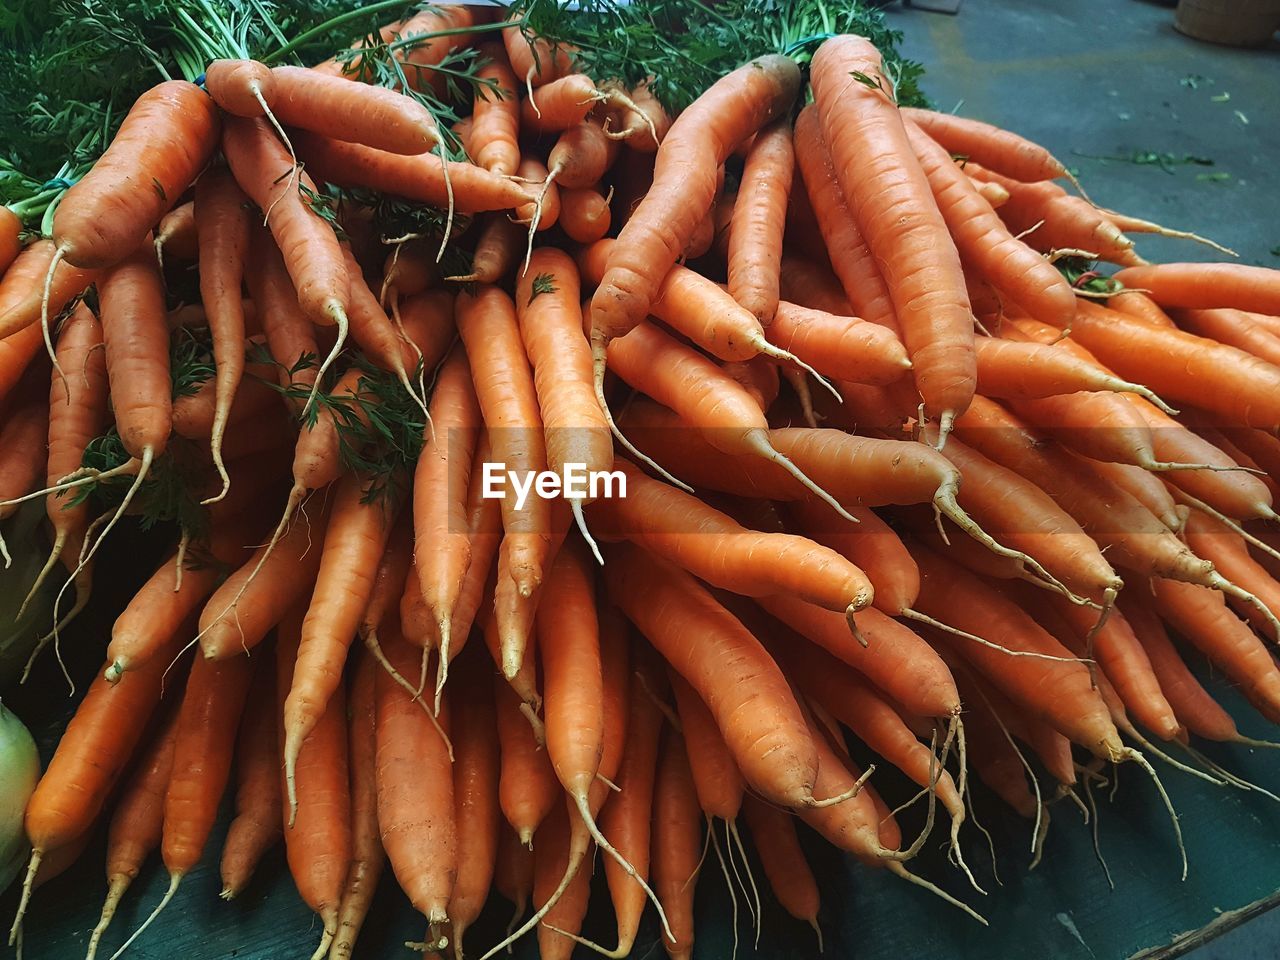 Close-up of carrots at market stall